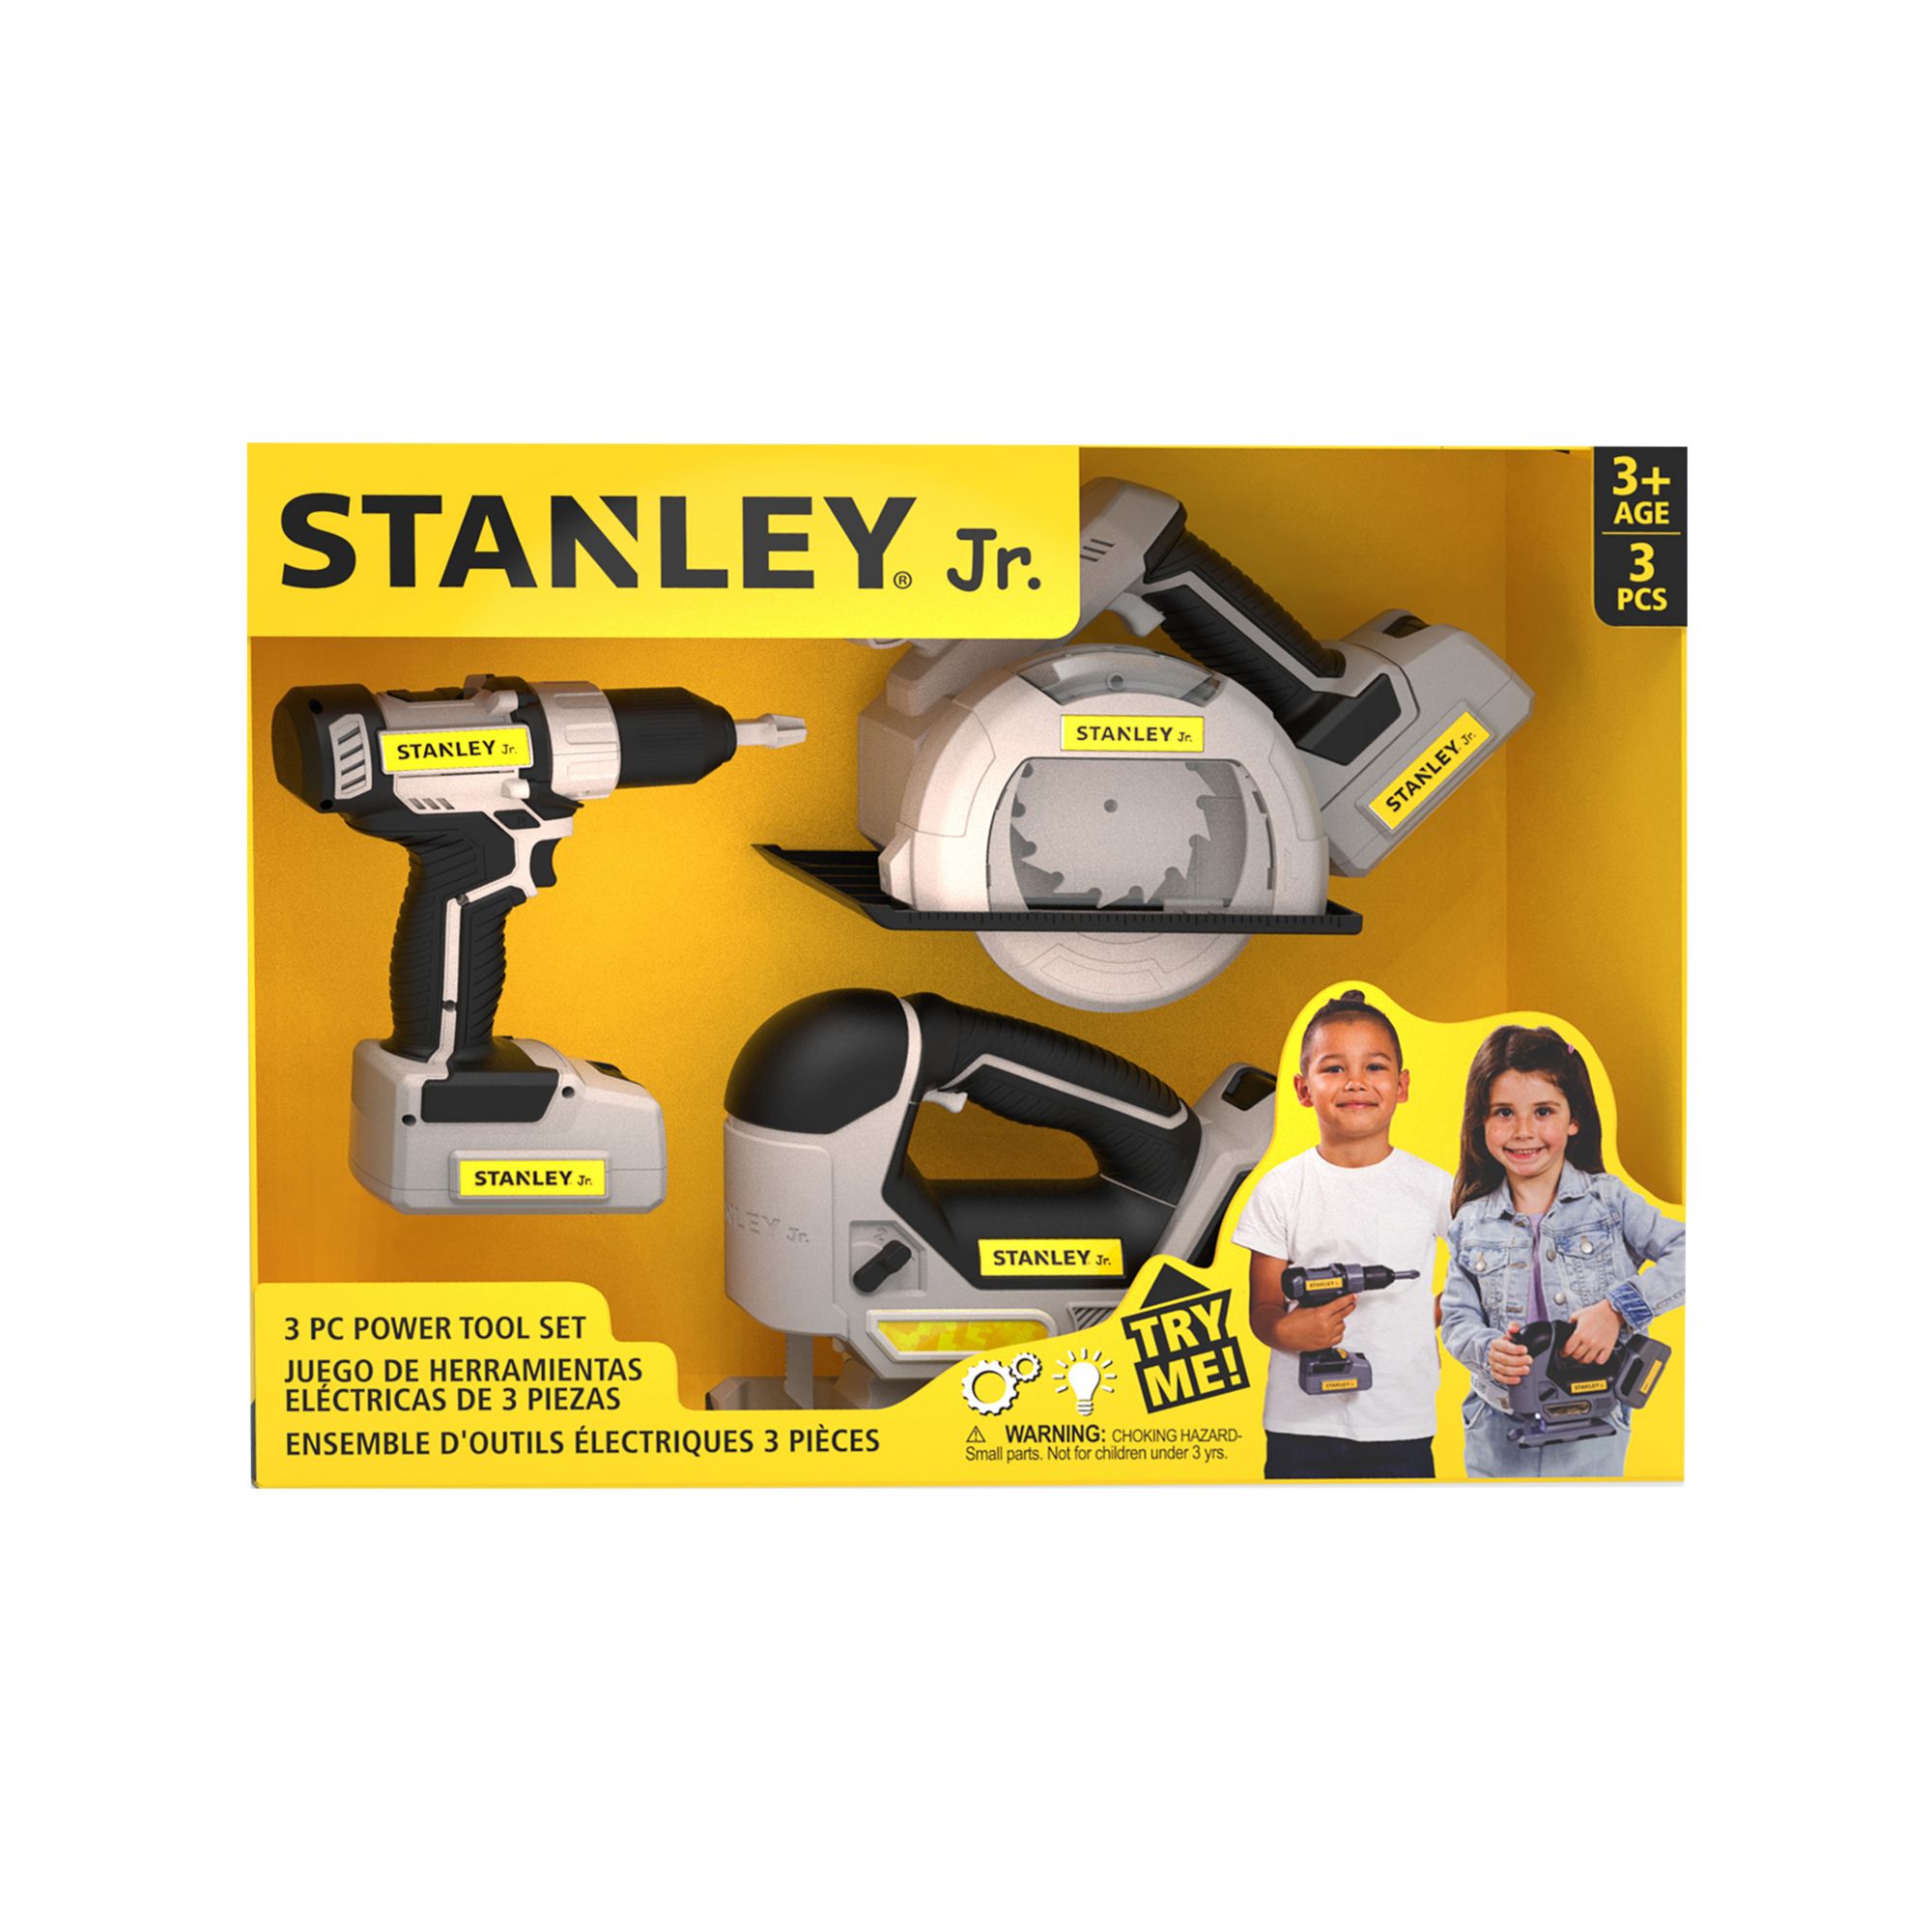 Stanley, Power Tools